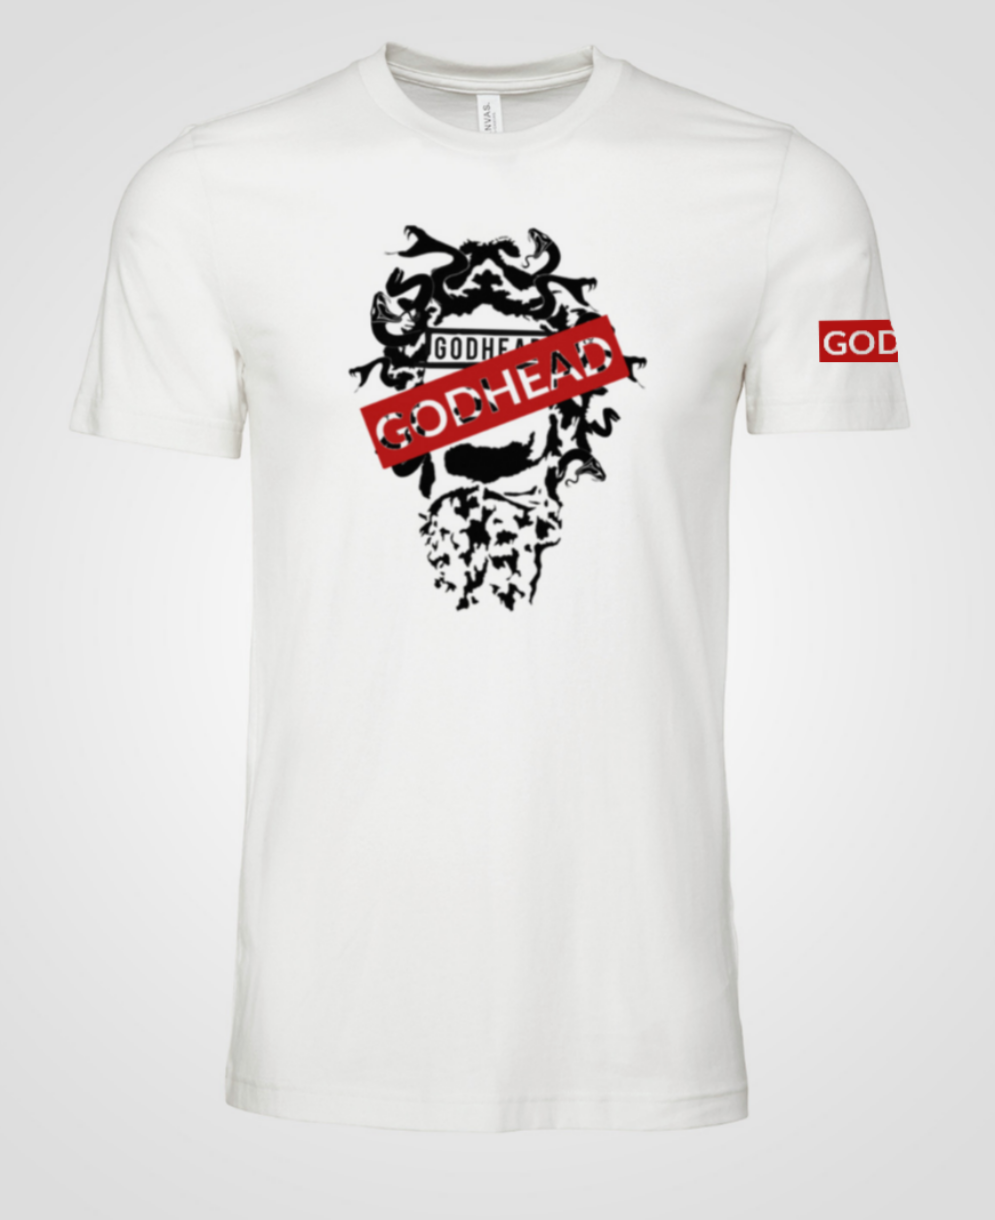 GODHEAD [Vandalized Facade] T-Shirt